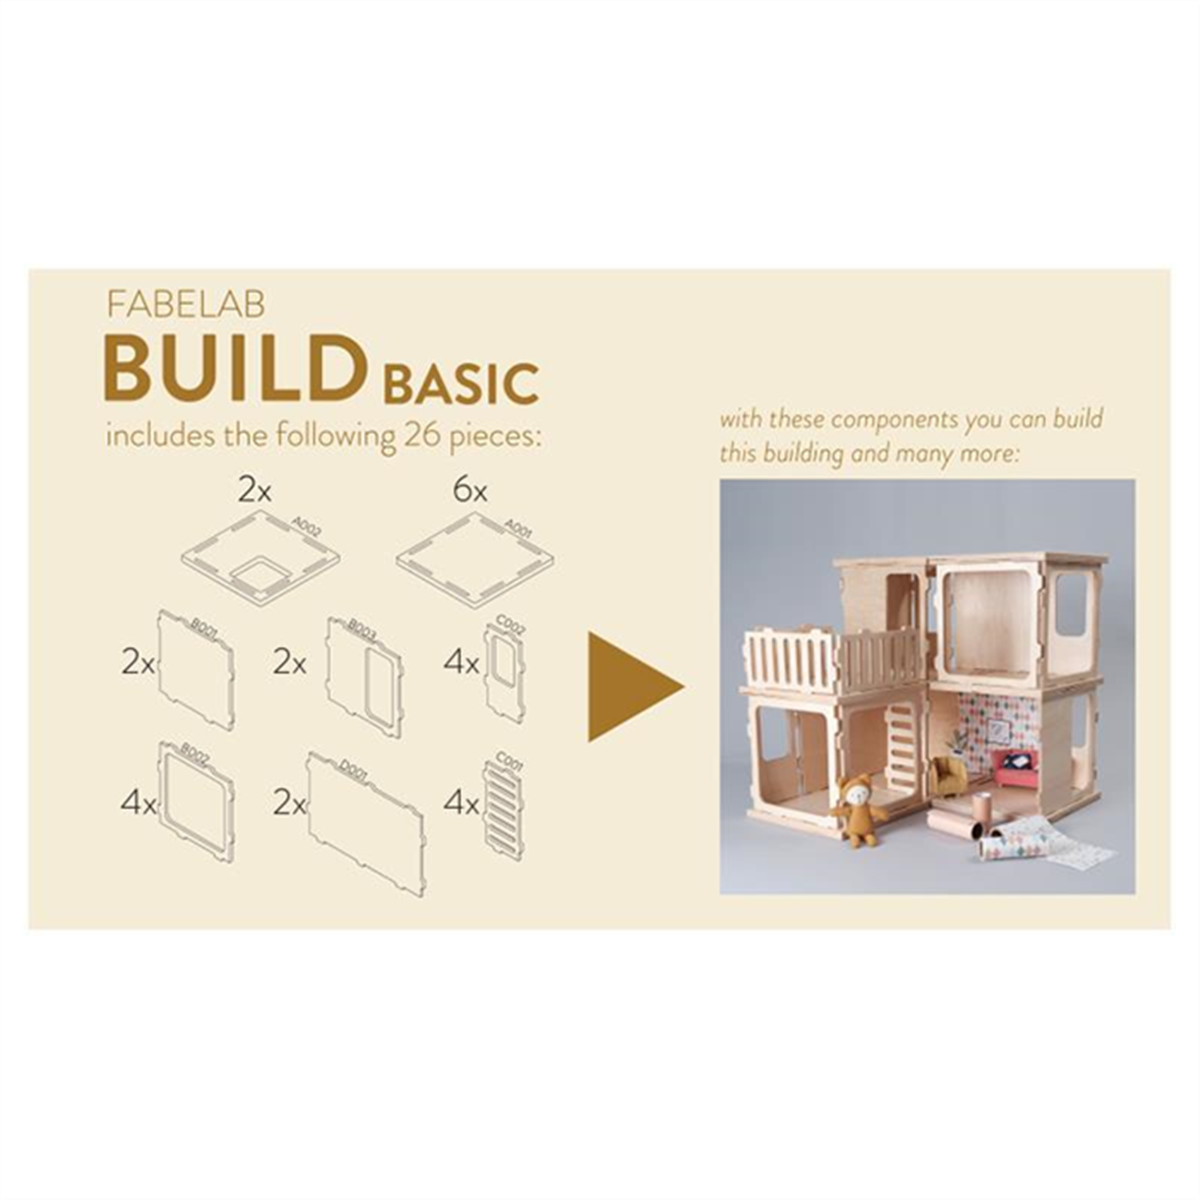 FABELAB Build Basic Kit